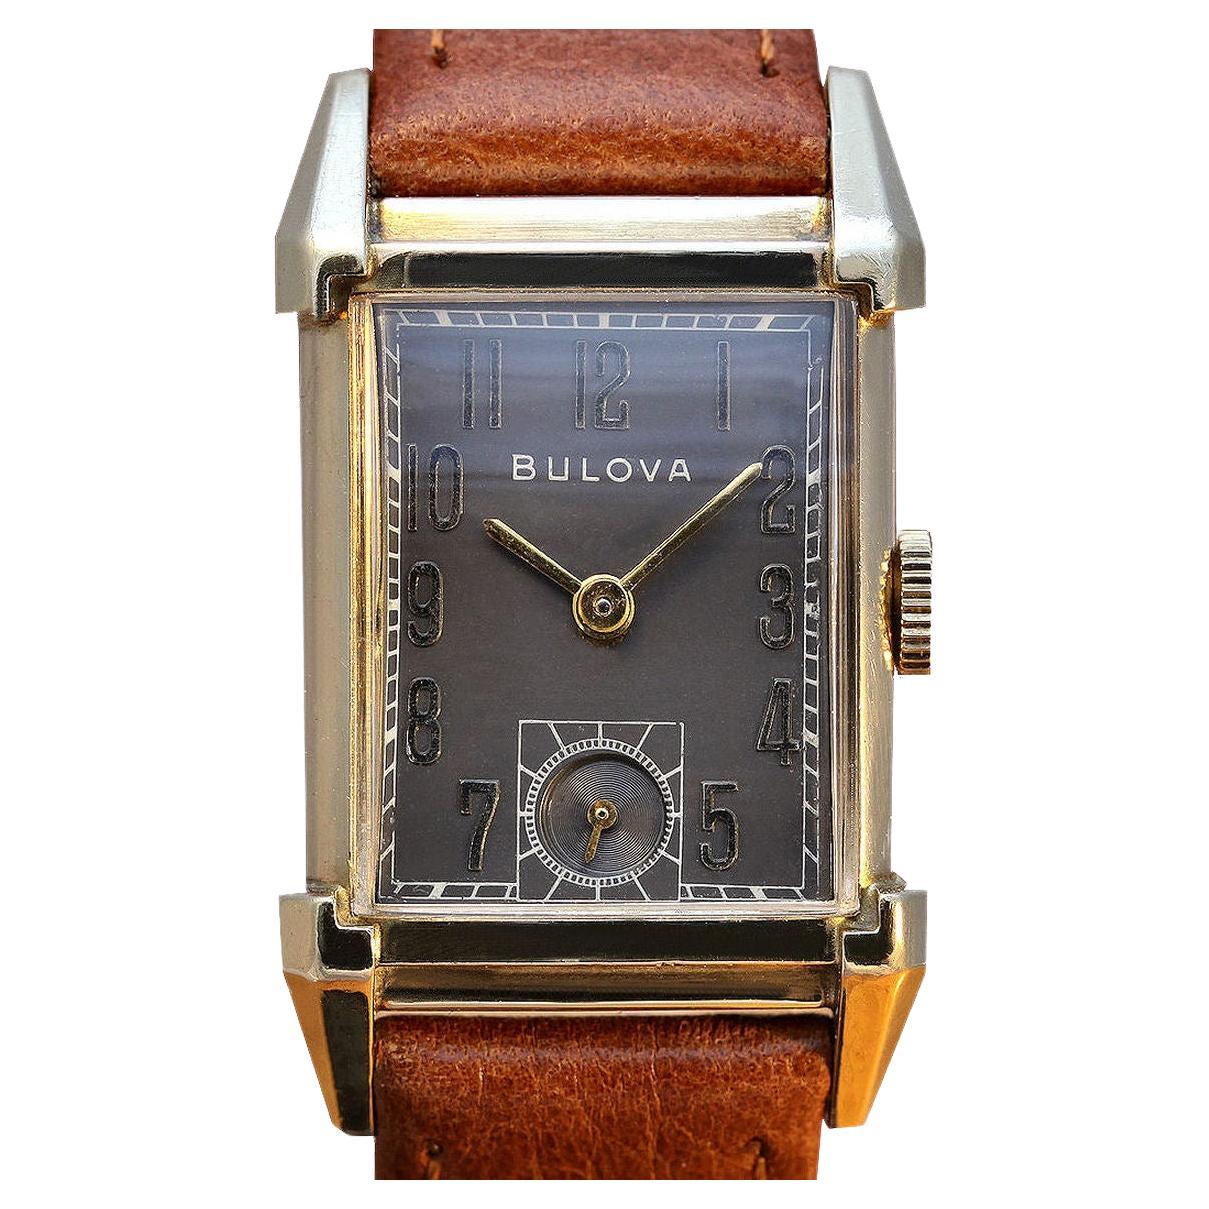 Art Deco Gents 10k Gold Filled Wrist Watch, Fully Serviced, by Bulova, C1947